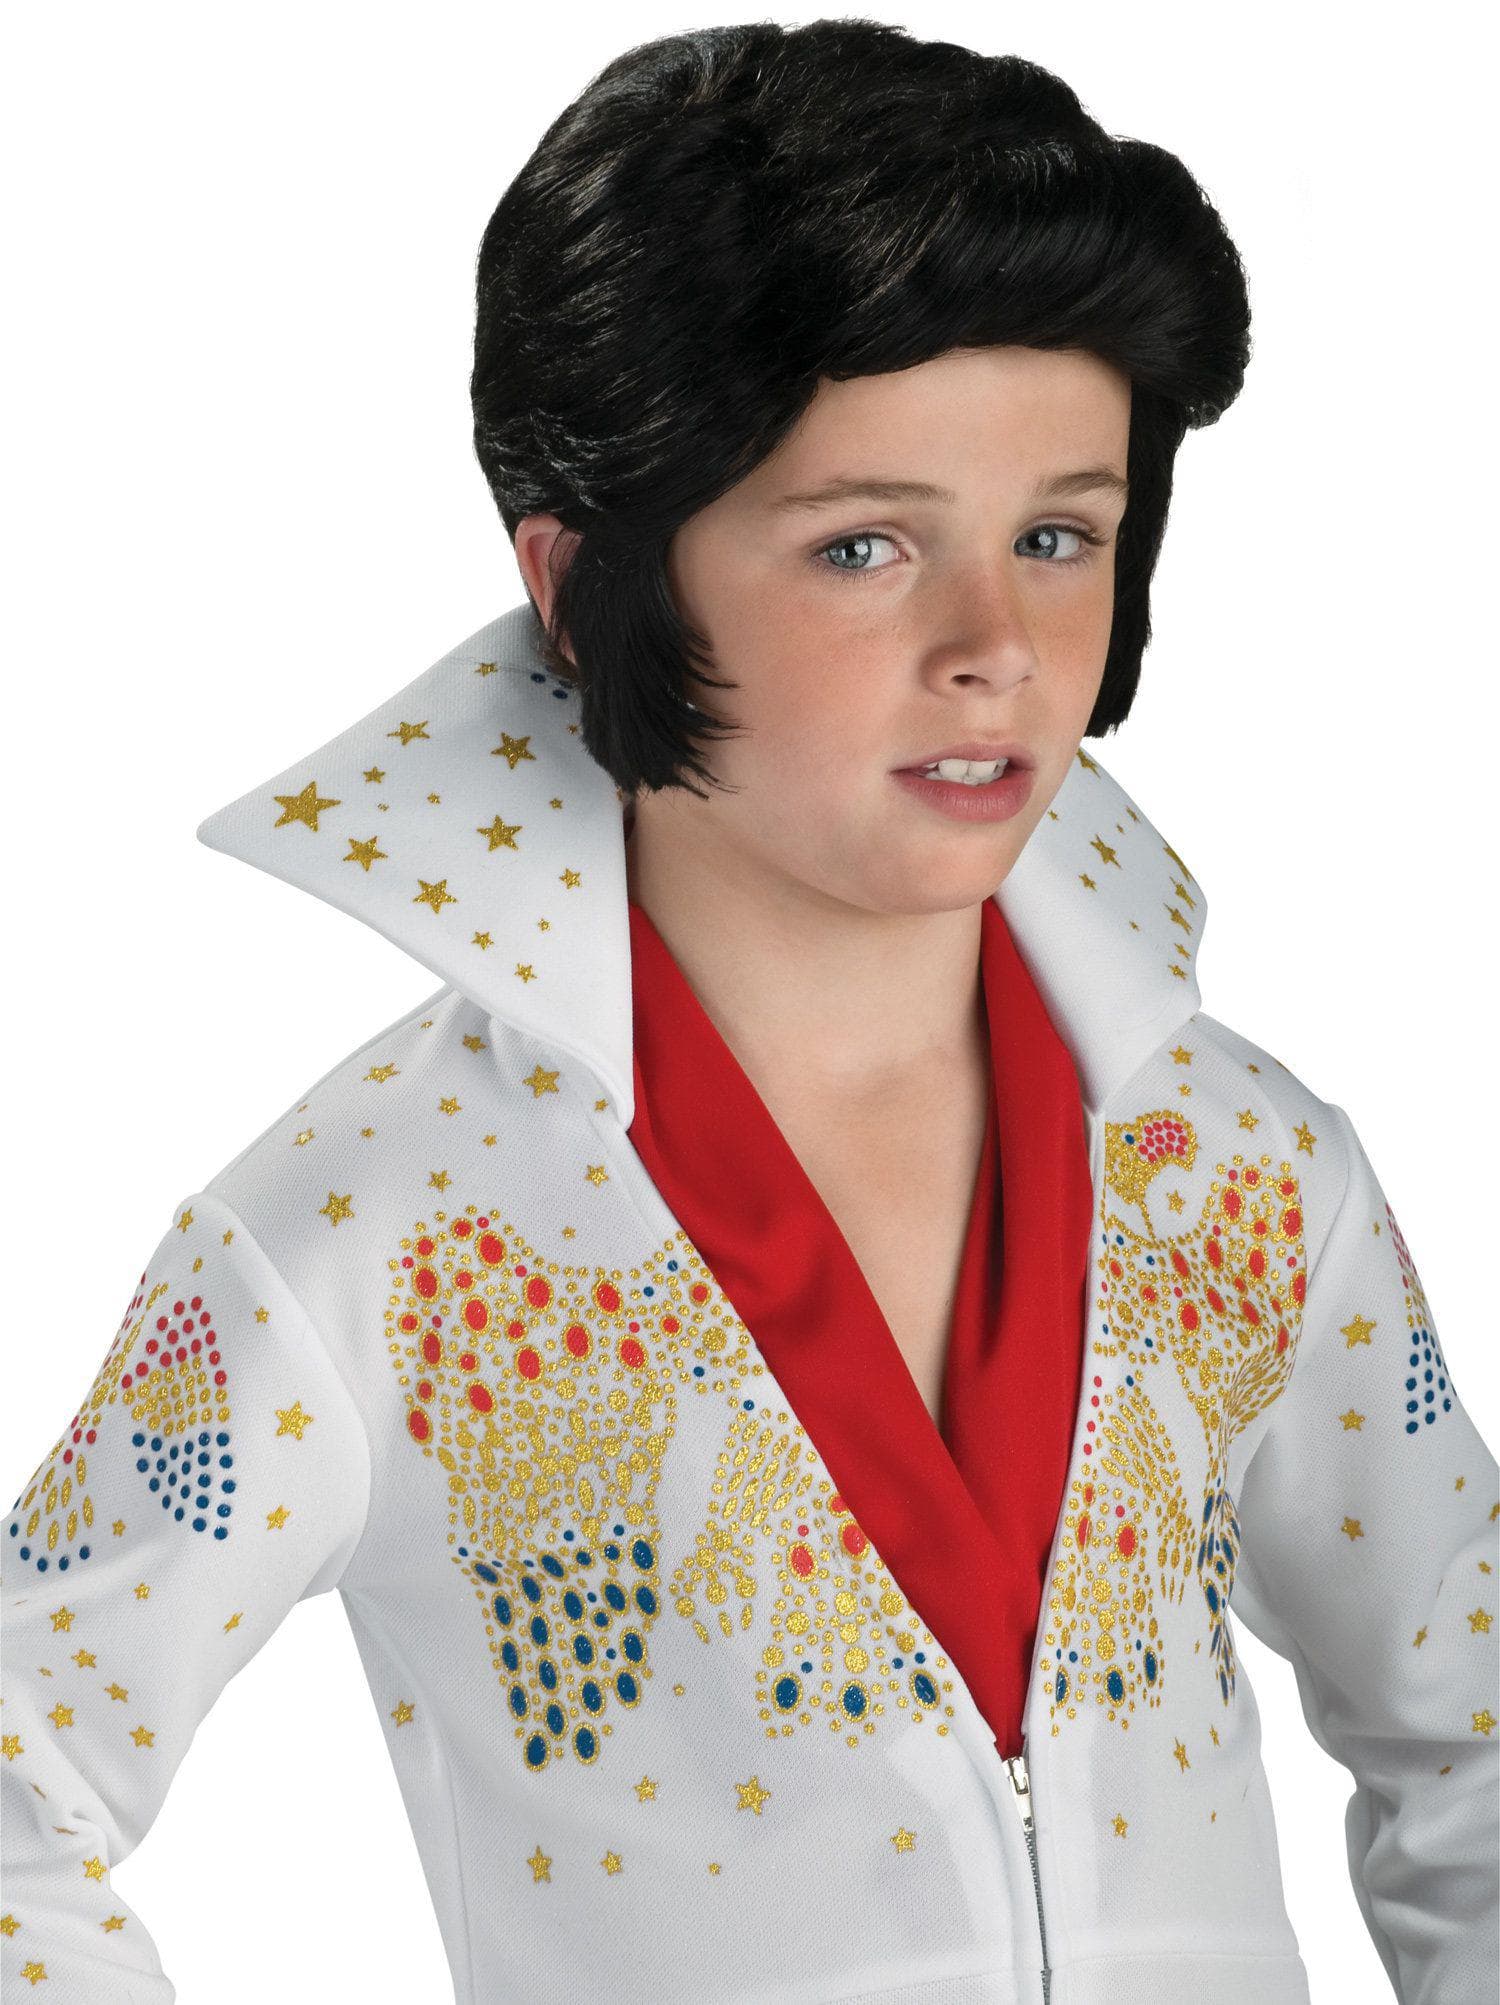 Boys' Black Elvis Wig - costumes.com